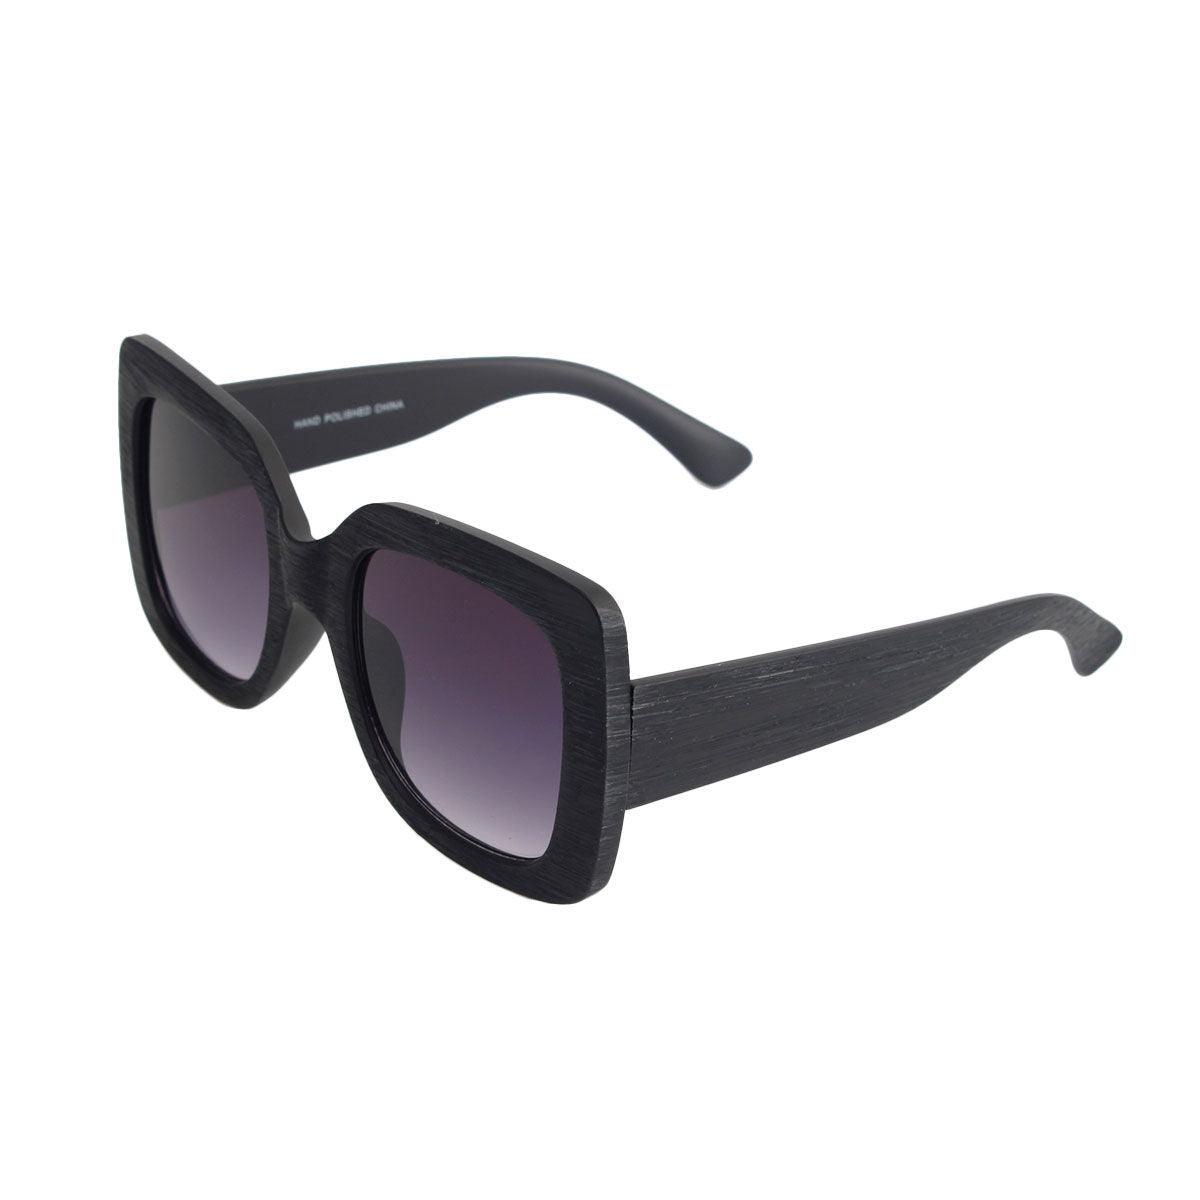 Sunglasses Women Candy Color Black Plastic Square